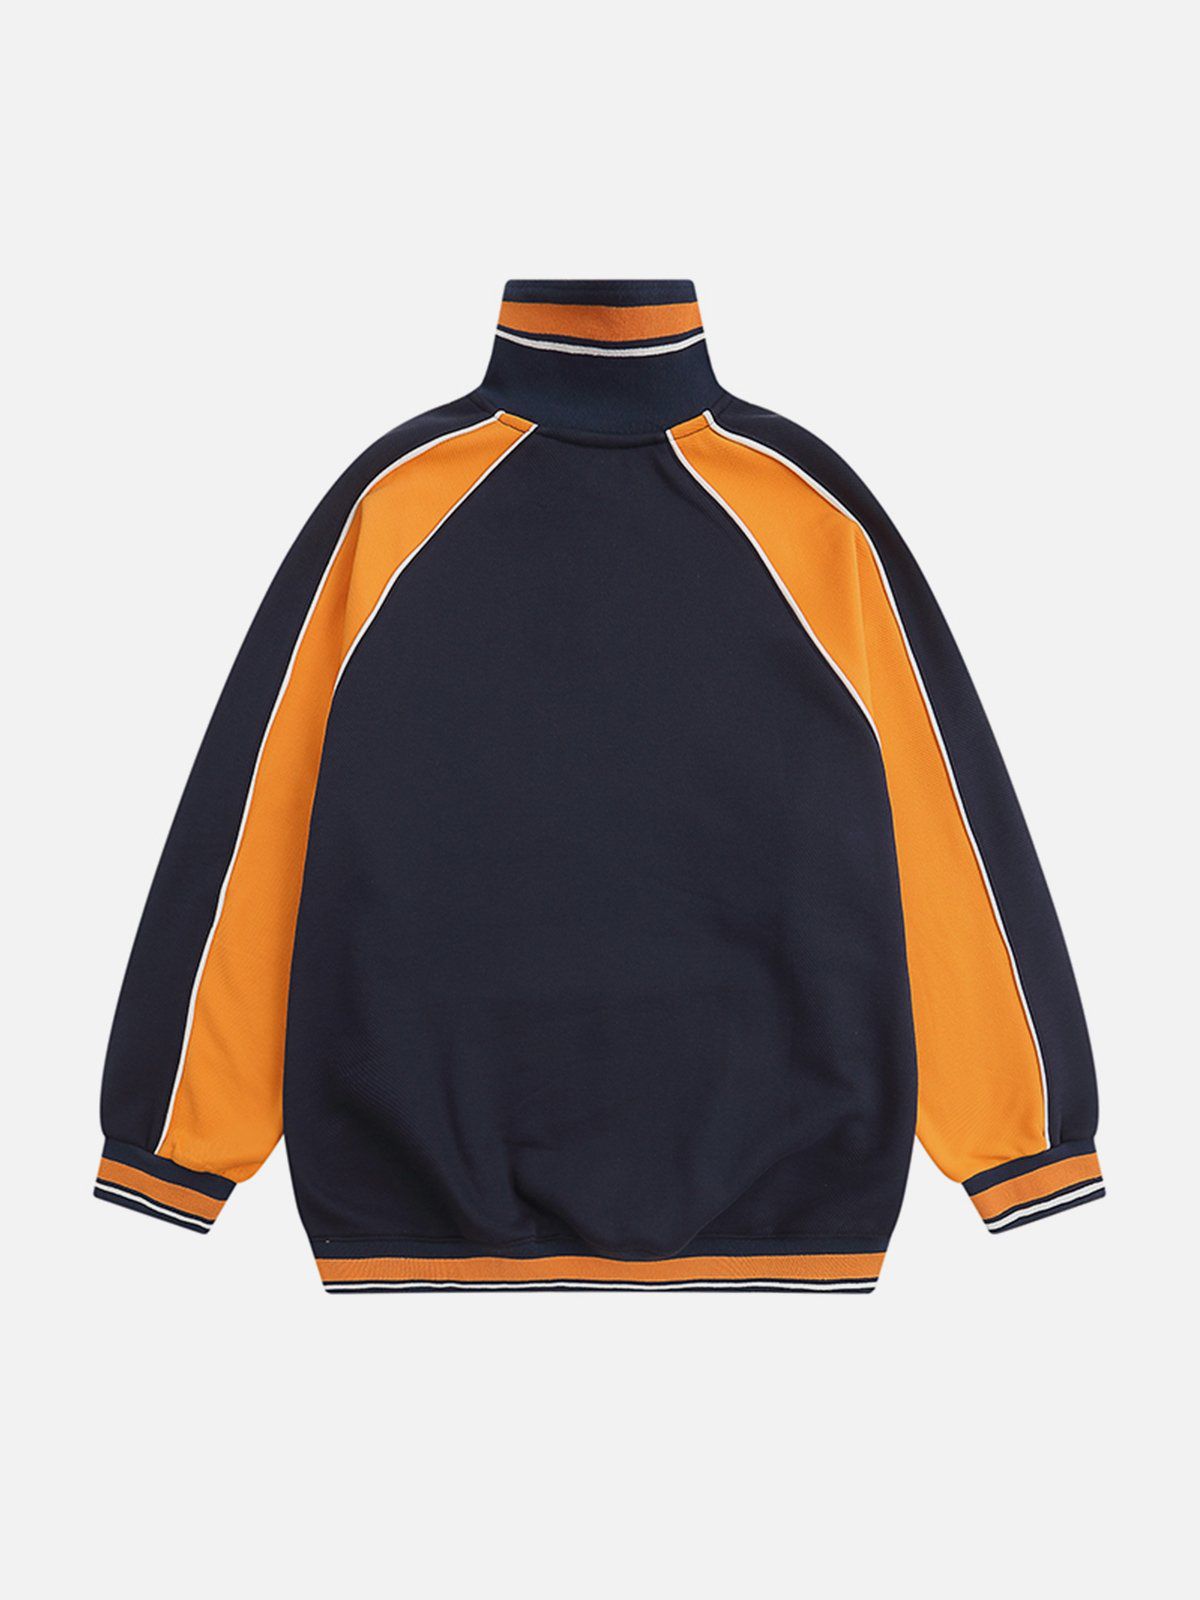 LUXENFY™ - Patchwork Color Clash Sweatshirt luxenfy.com